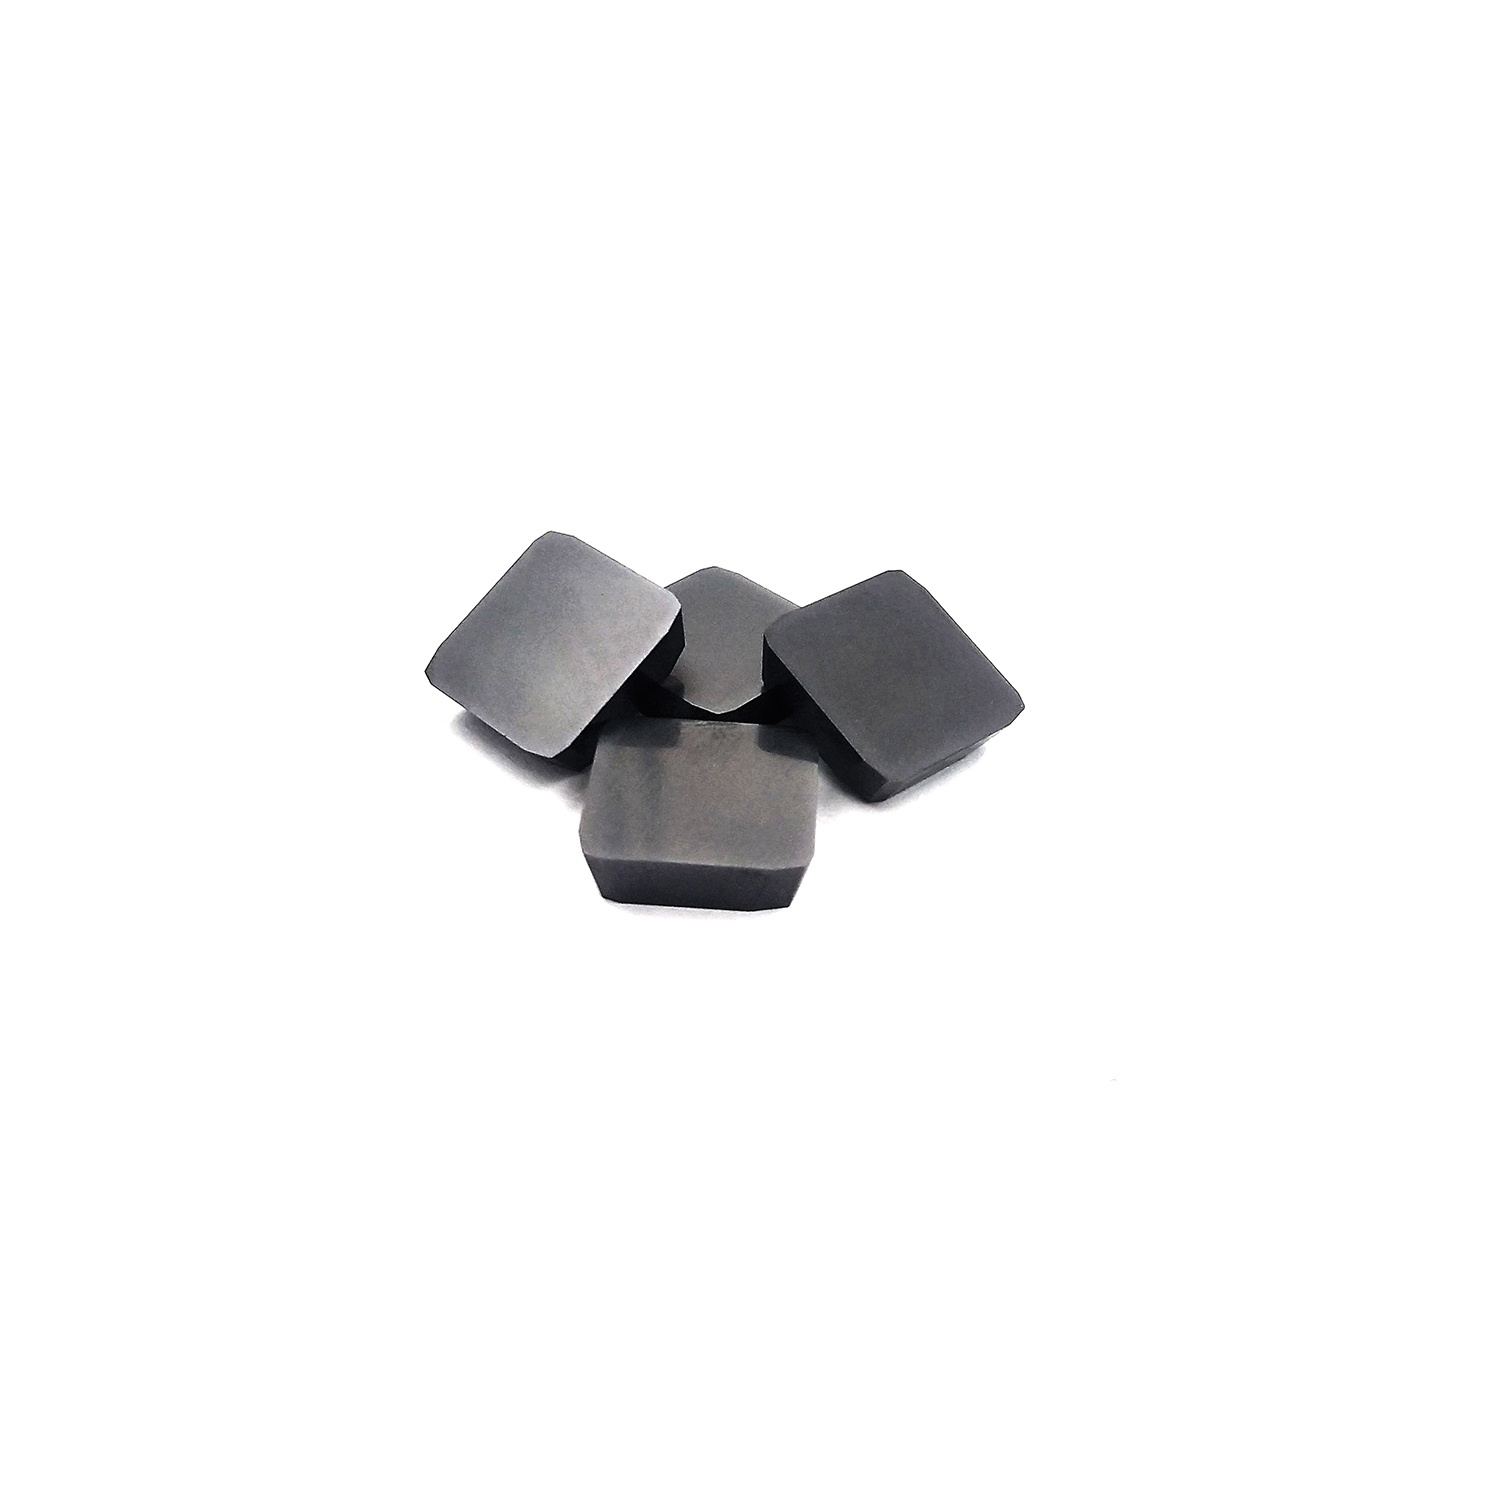 SPKN Good Performance Tungsten Carbide Milling Inserts